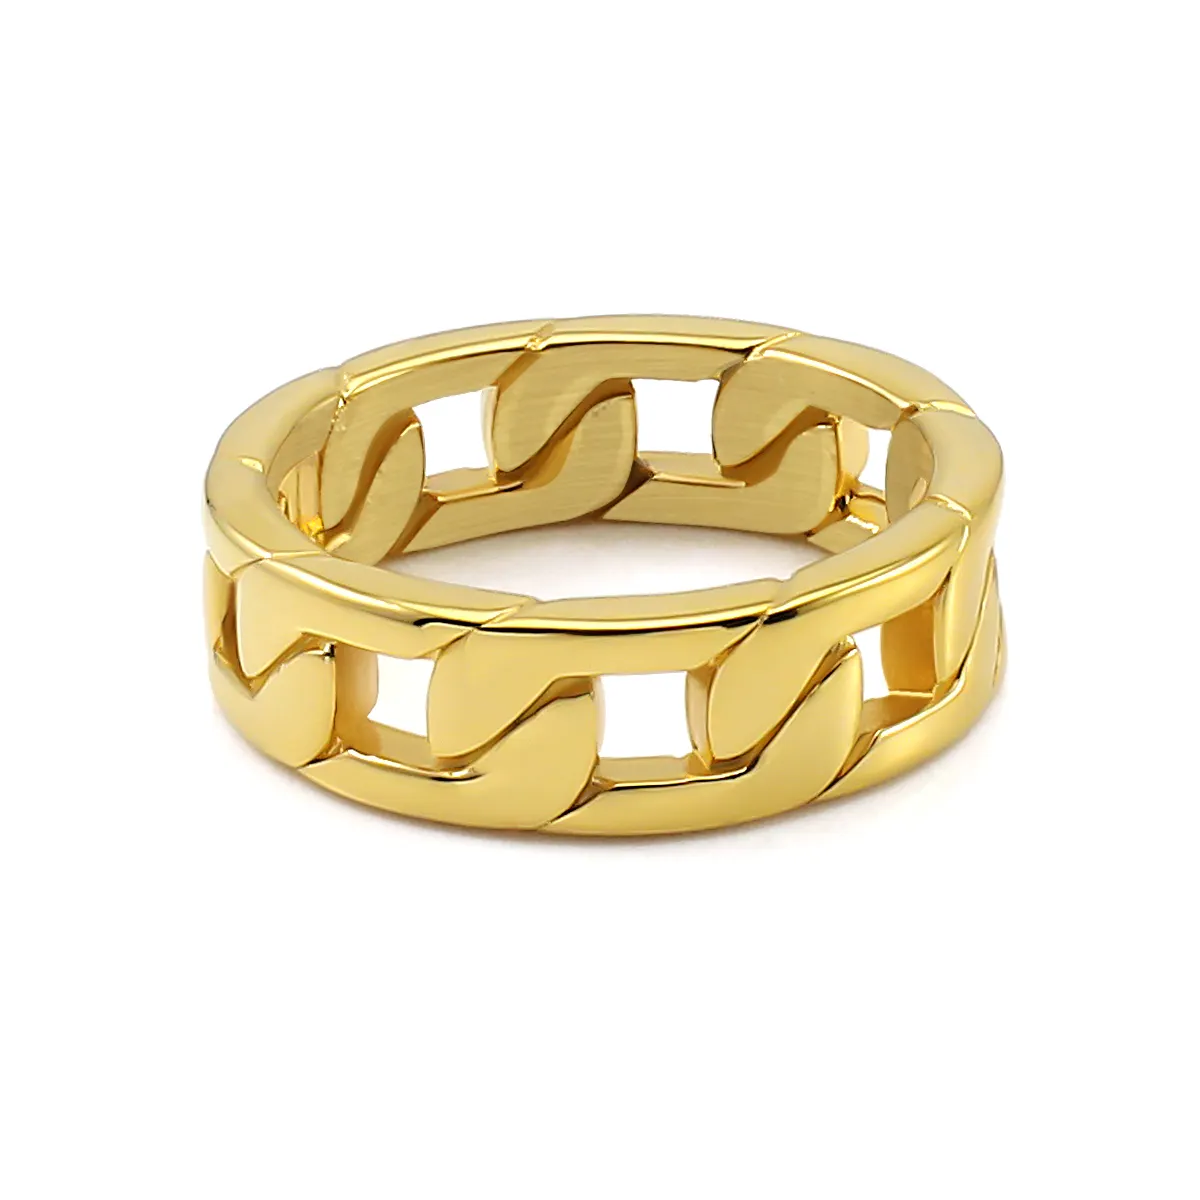 Cincin pernikahan klasik sederhana wanita, perhiasan cincin pertunangan, cincin jari poligon warna-warni emas dan perak